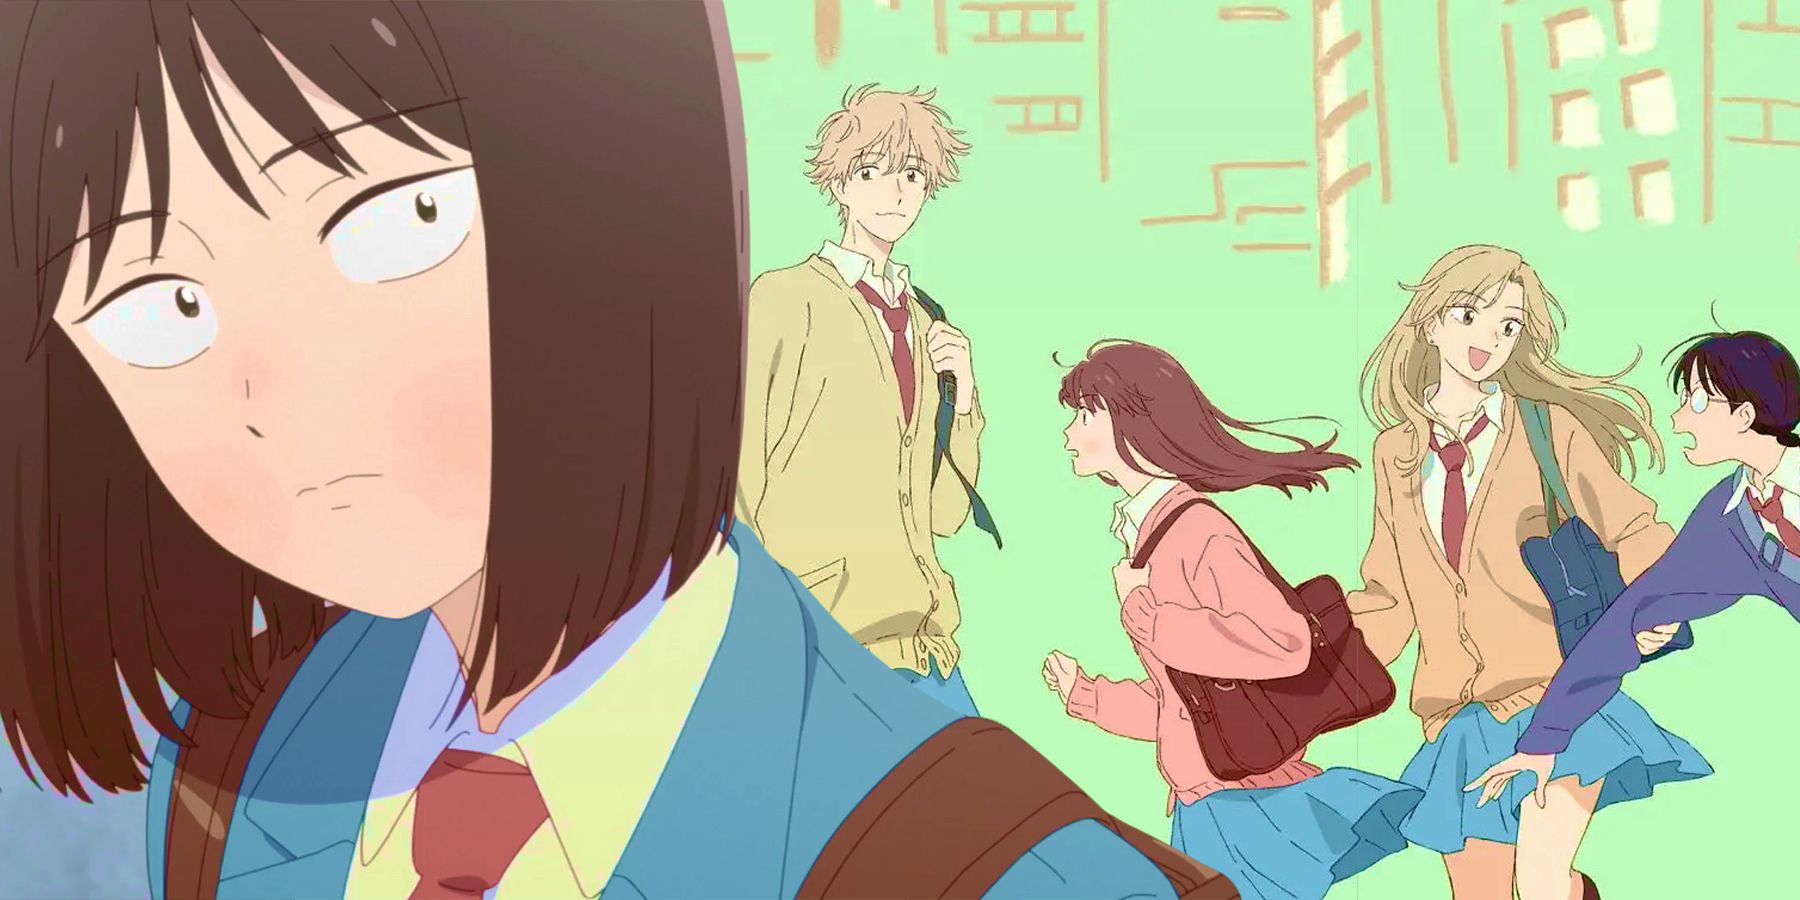 Skip Beat! Manga Gets Audio Adaptation With Anime Cast